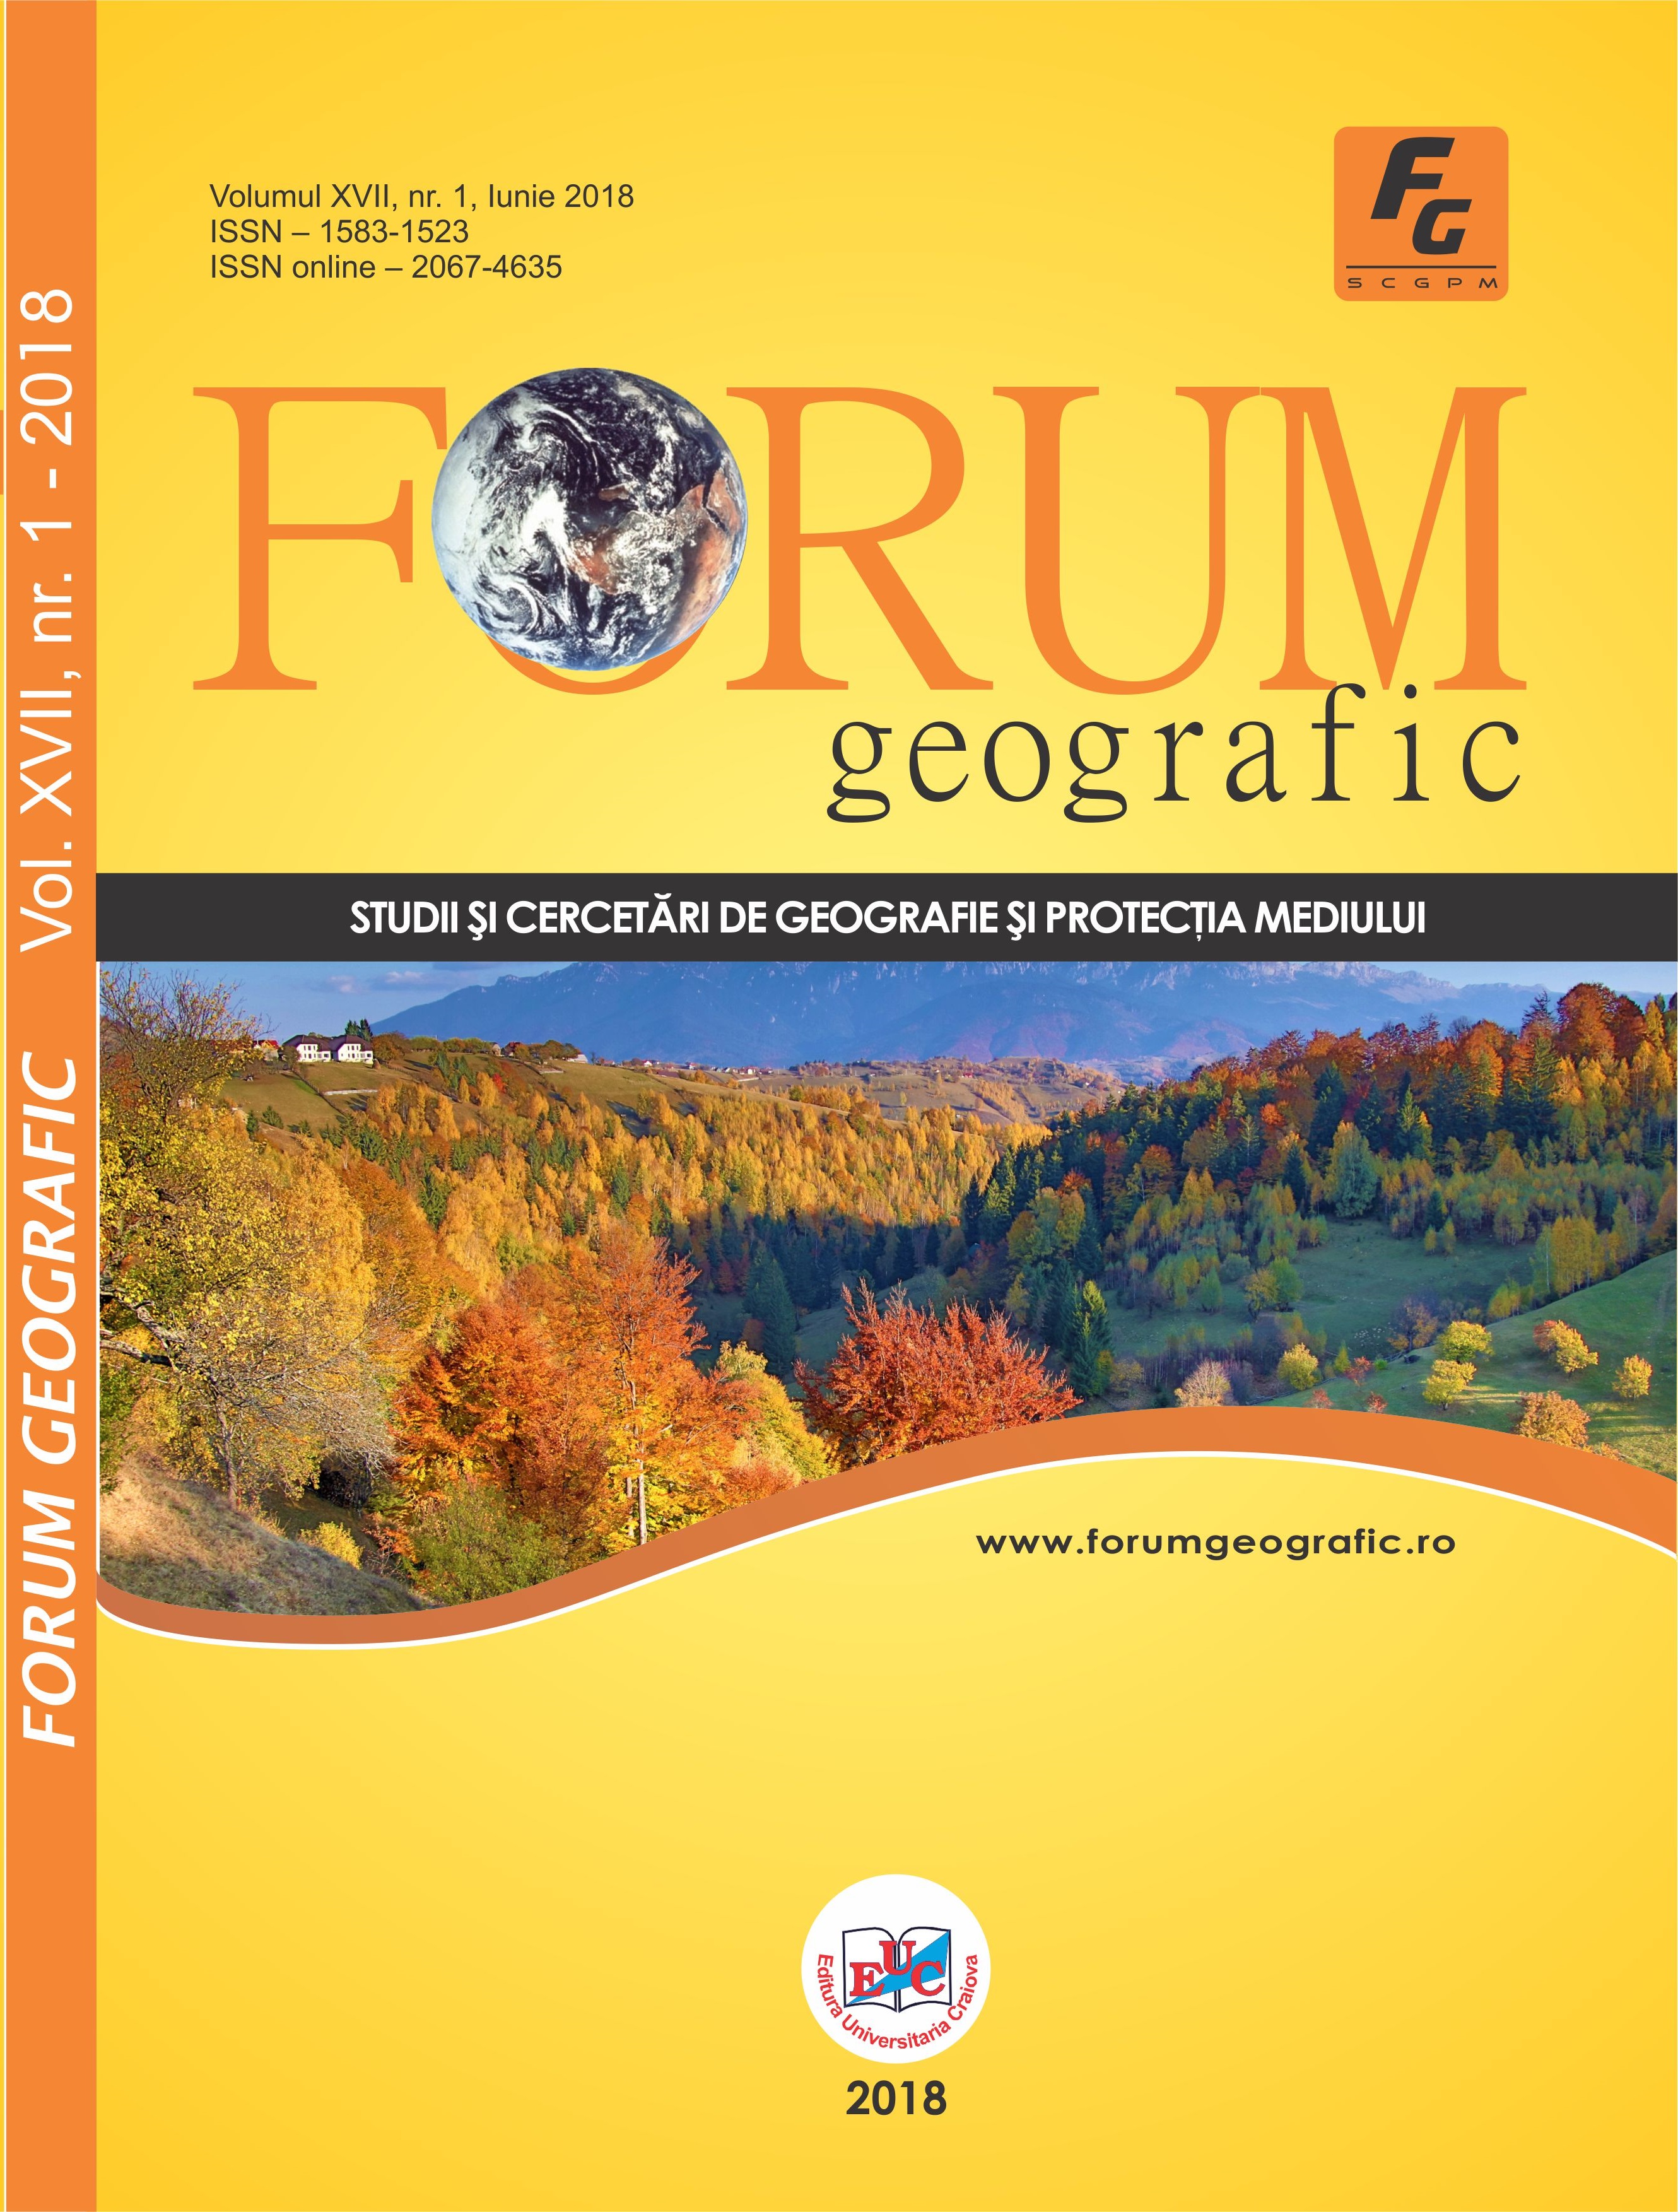 Forum geografic: Volum XVII, număr 1